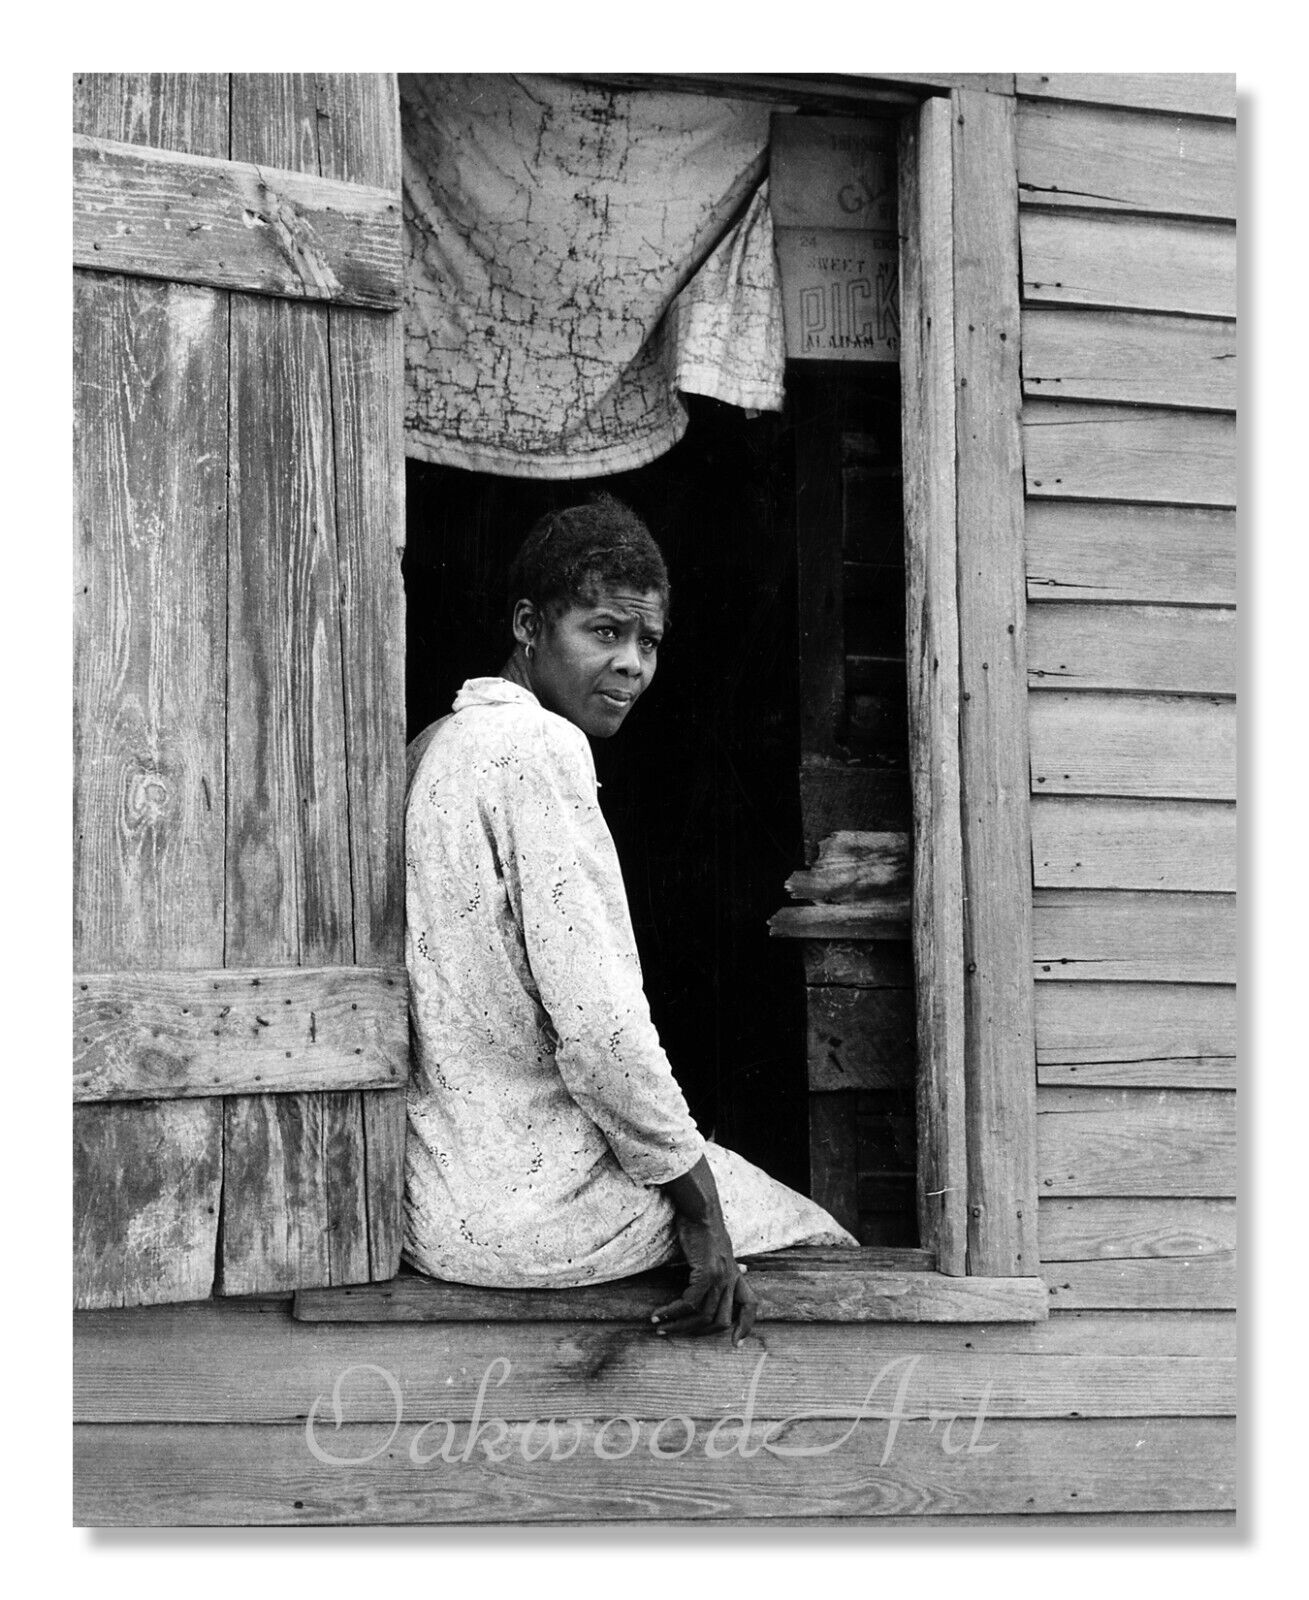 Georgia Black Woman Sitting in a Cabin Window c1940s, Vintage Photo Reprint